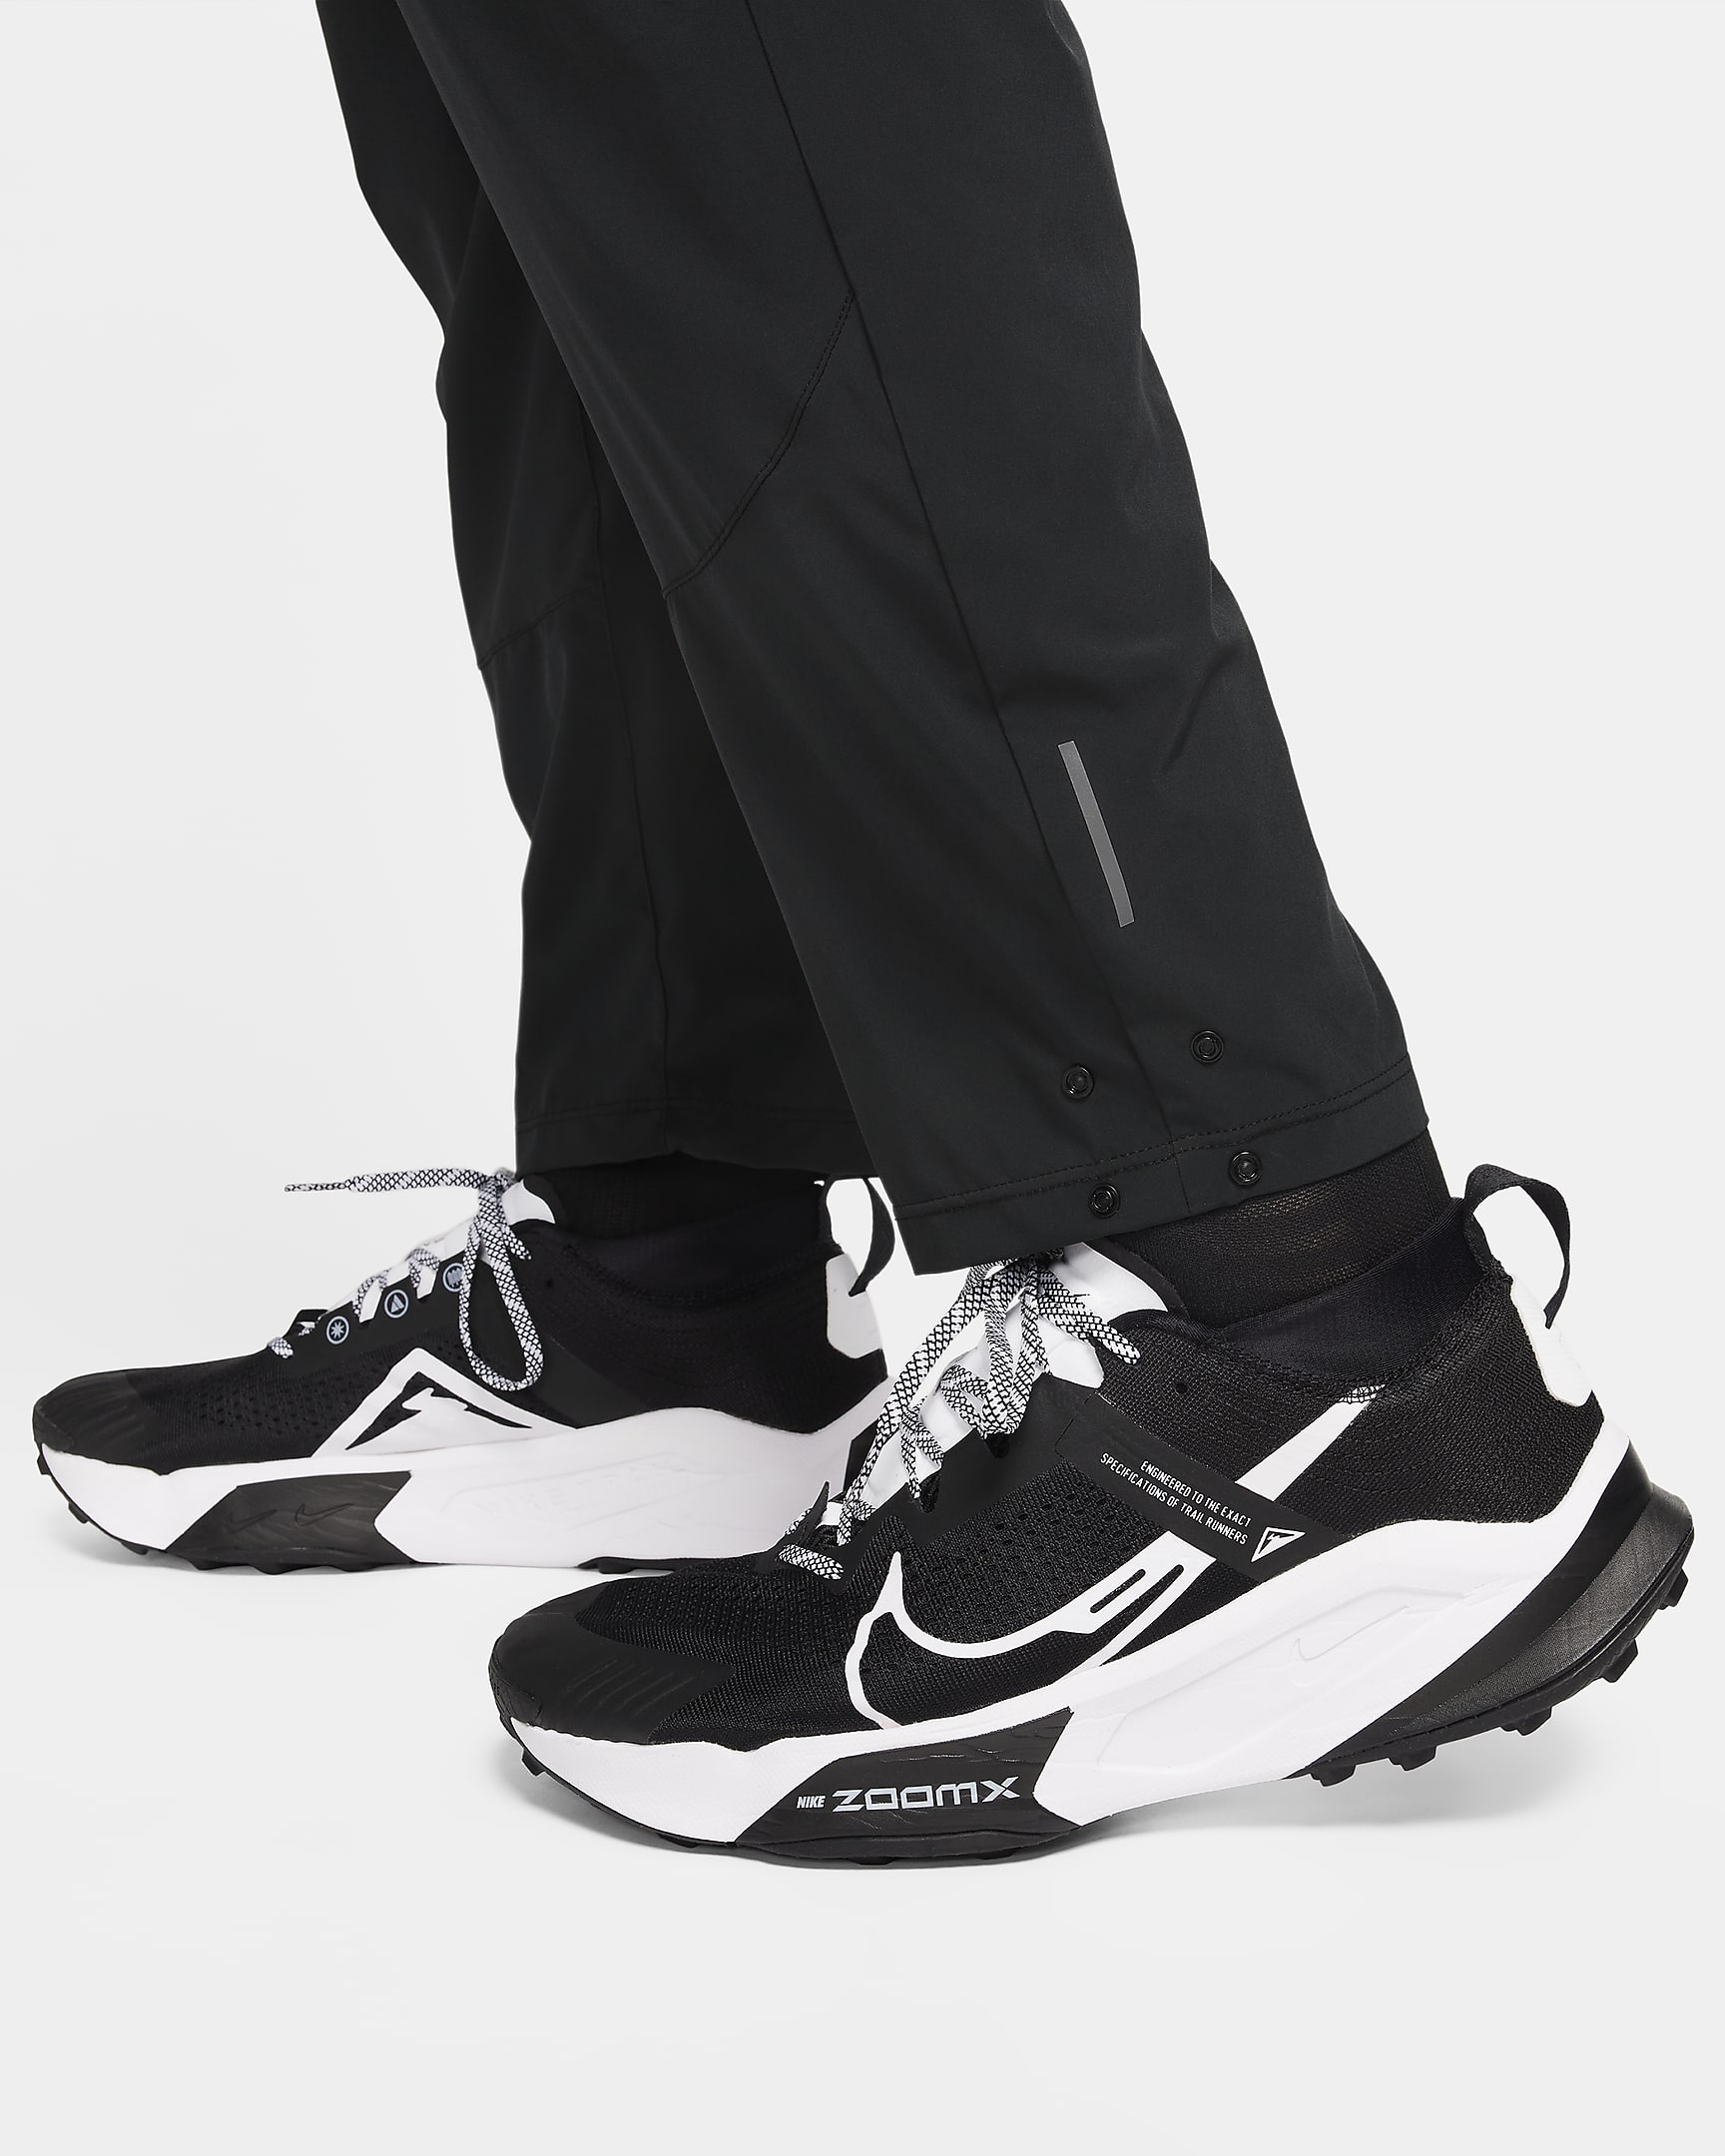 Nike Trail Dawn Range Men's Dri-FIT Running Trousers - Black/Black/White